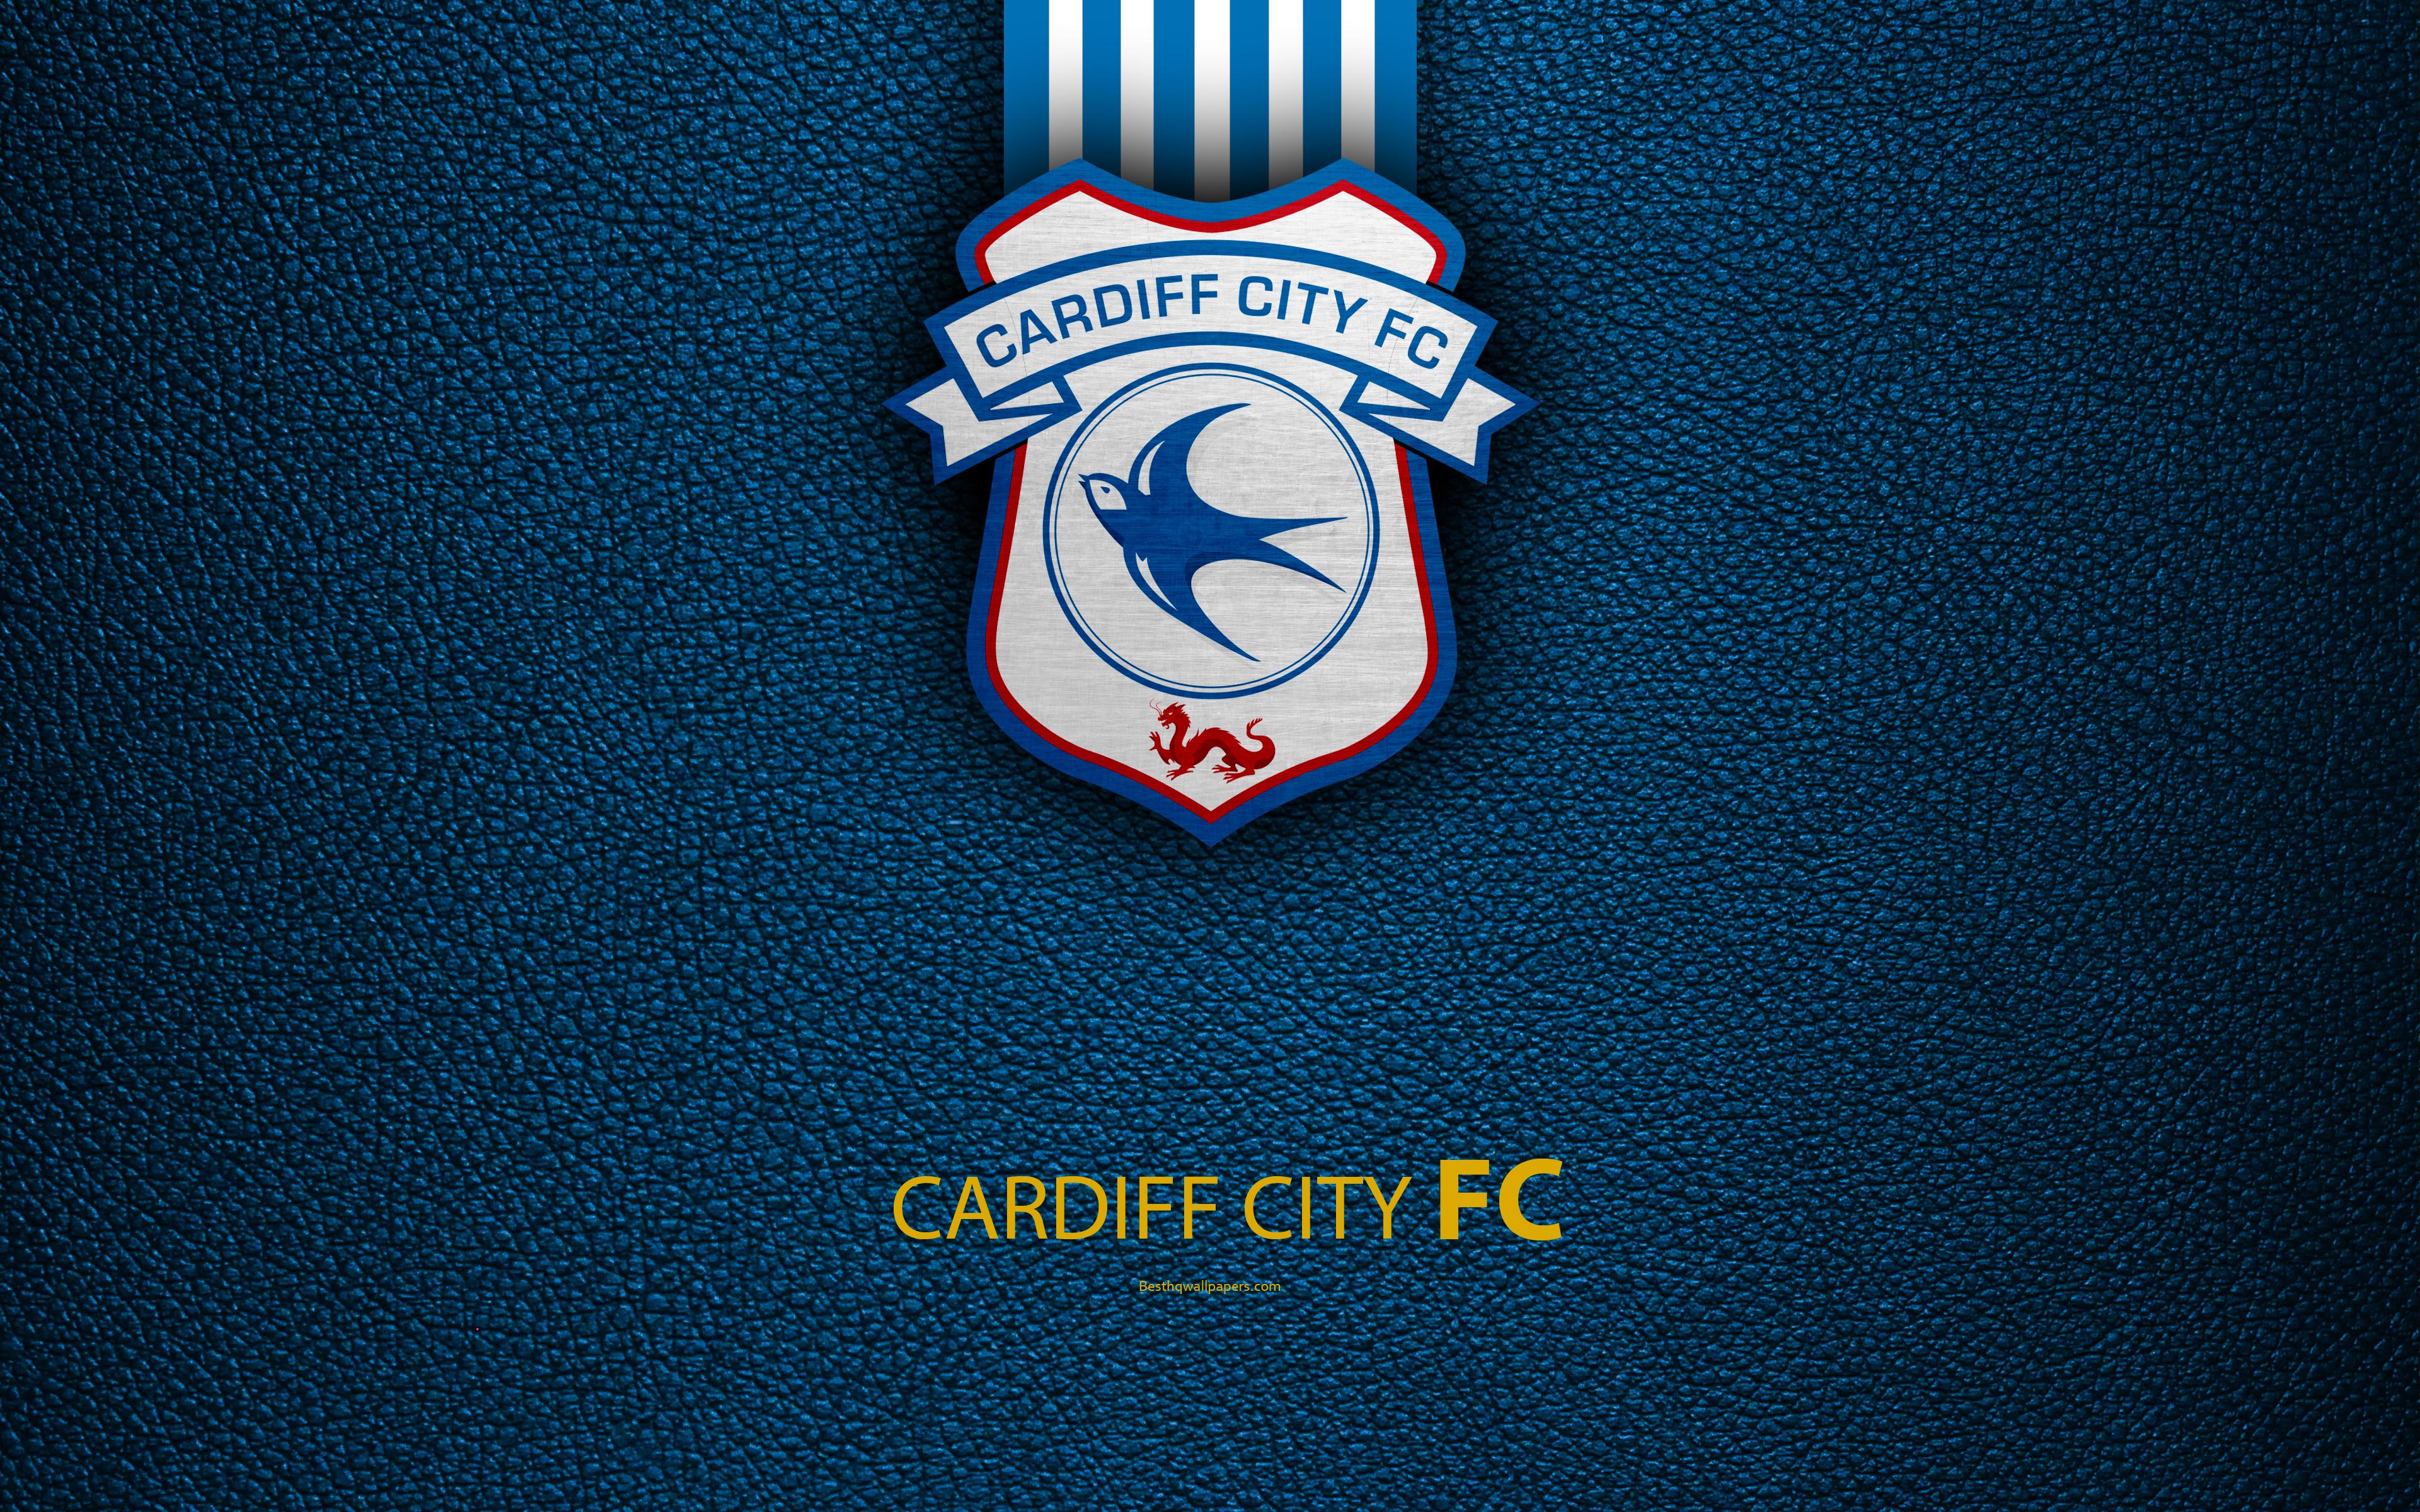 Download wallpaper Cardiff City FC, 4K, English football club, logo